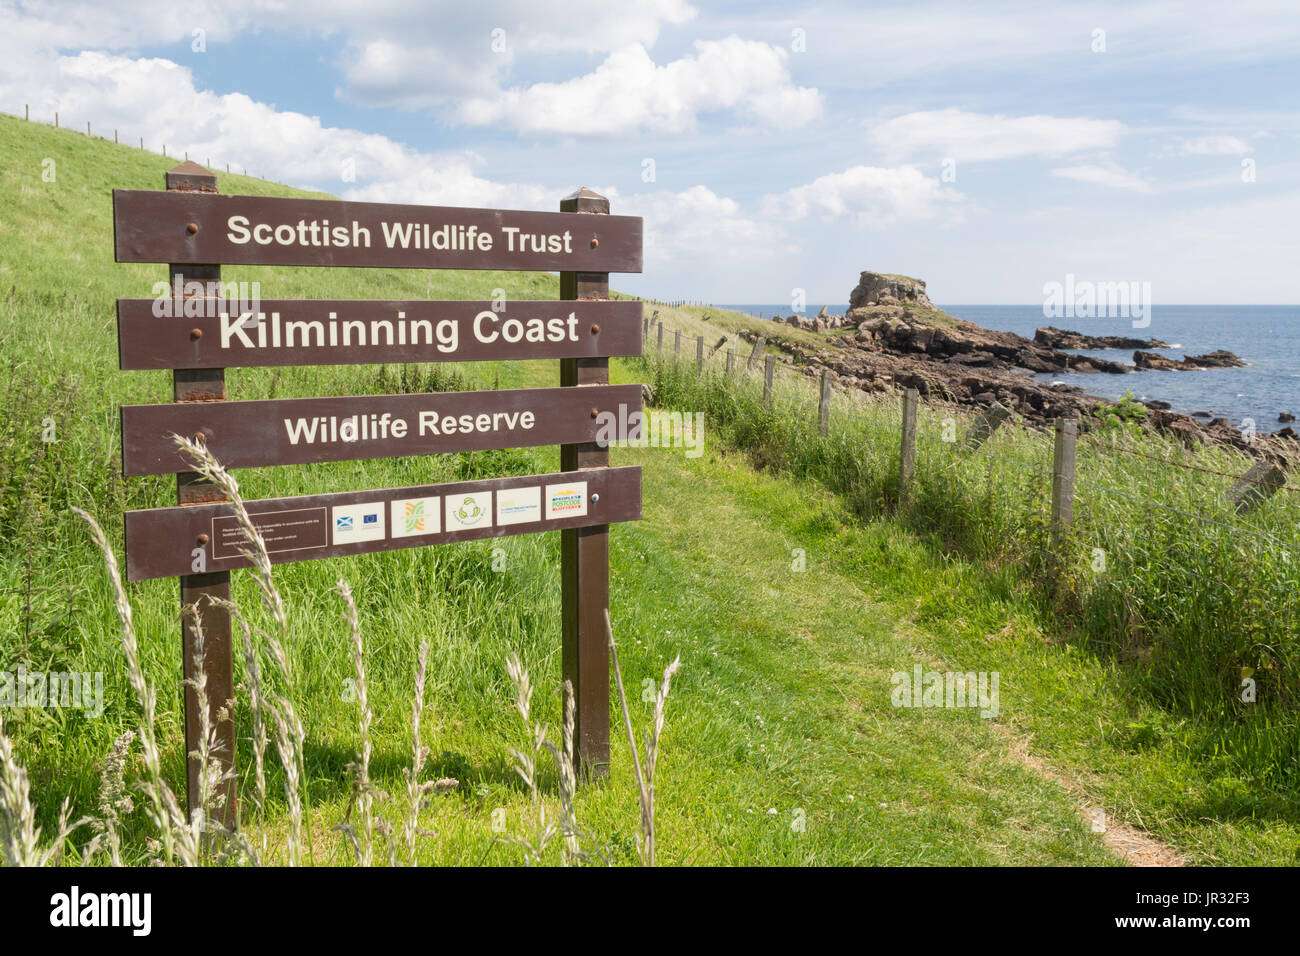 Scottish Wildlife Trust Kilminning Coast Wildlife Reserve signo, Fife, Escocia, Reino Unido Foto de stock